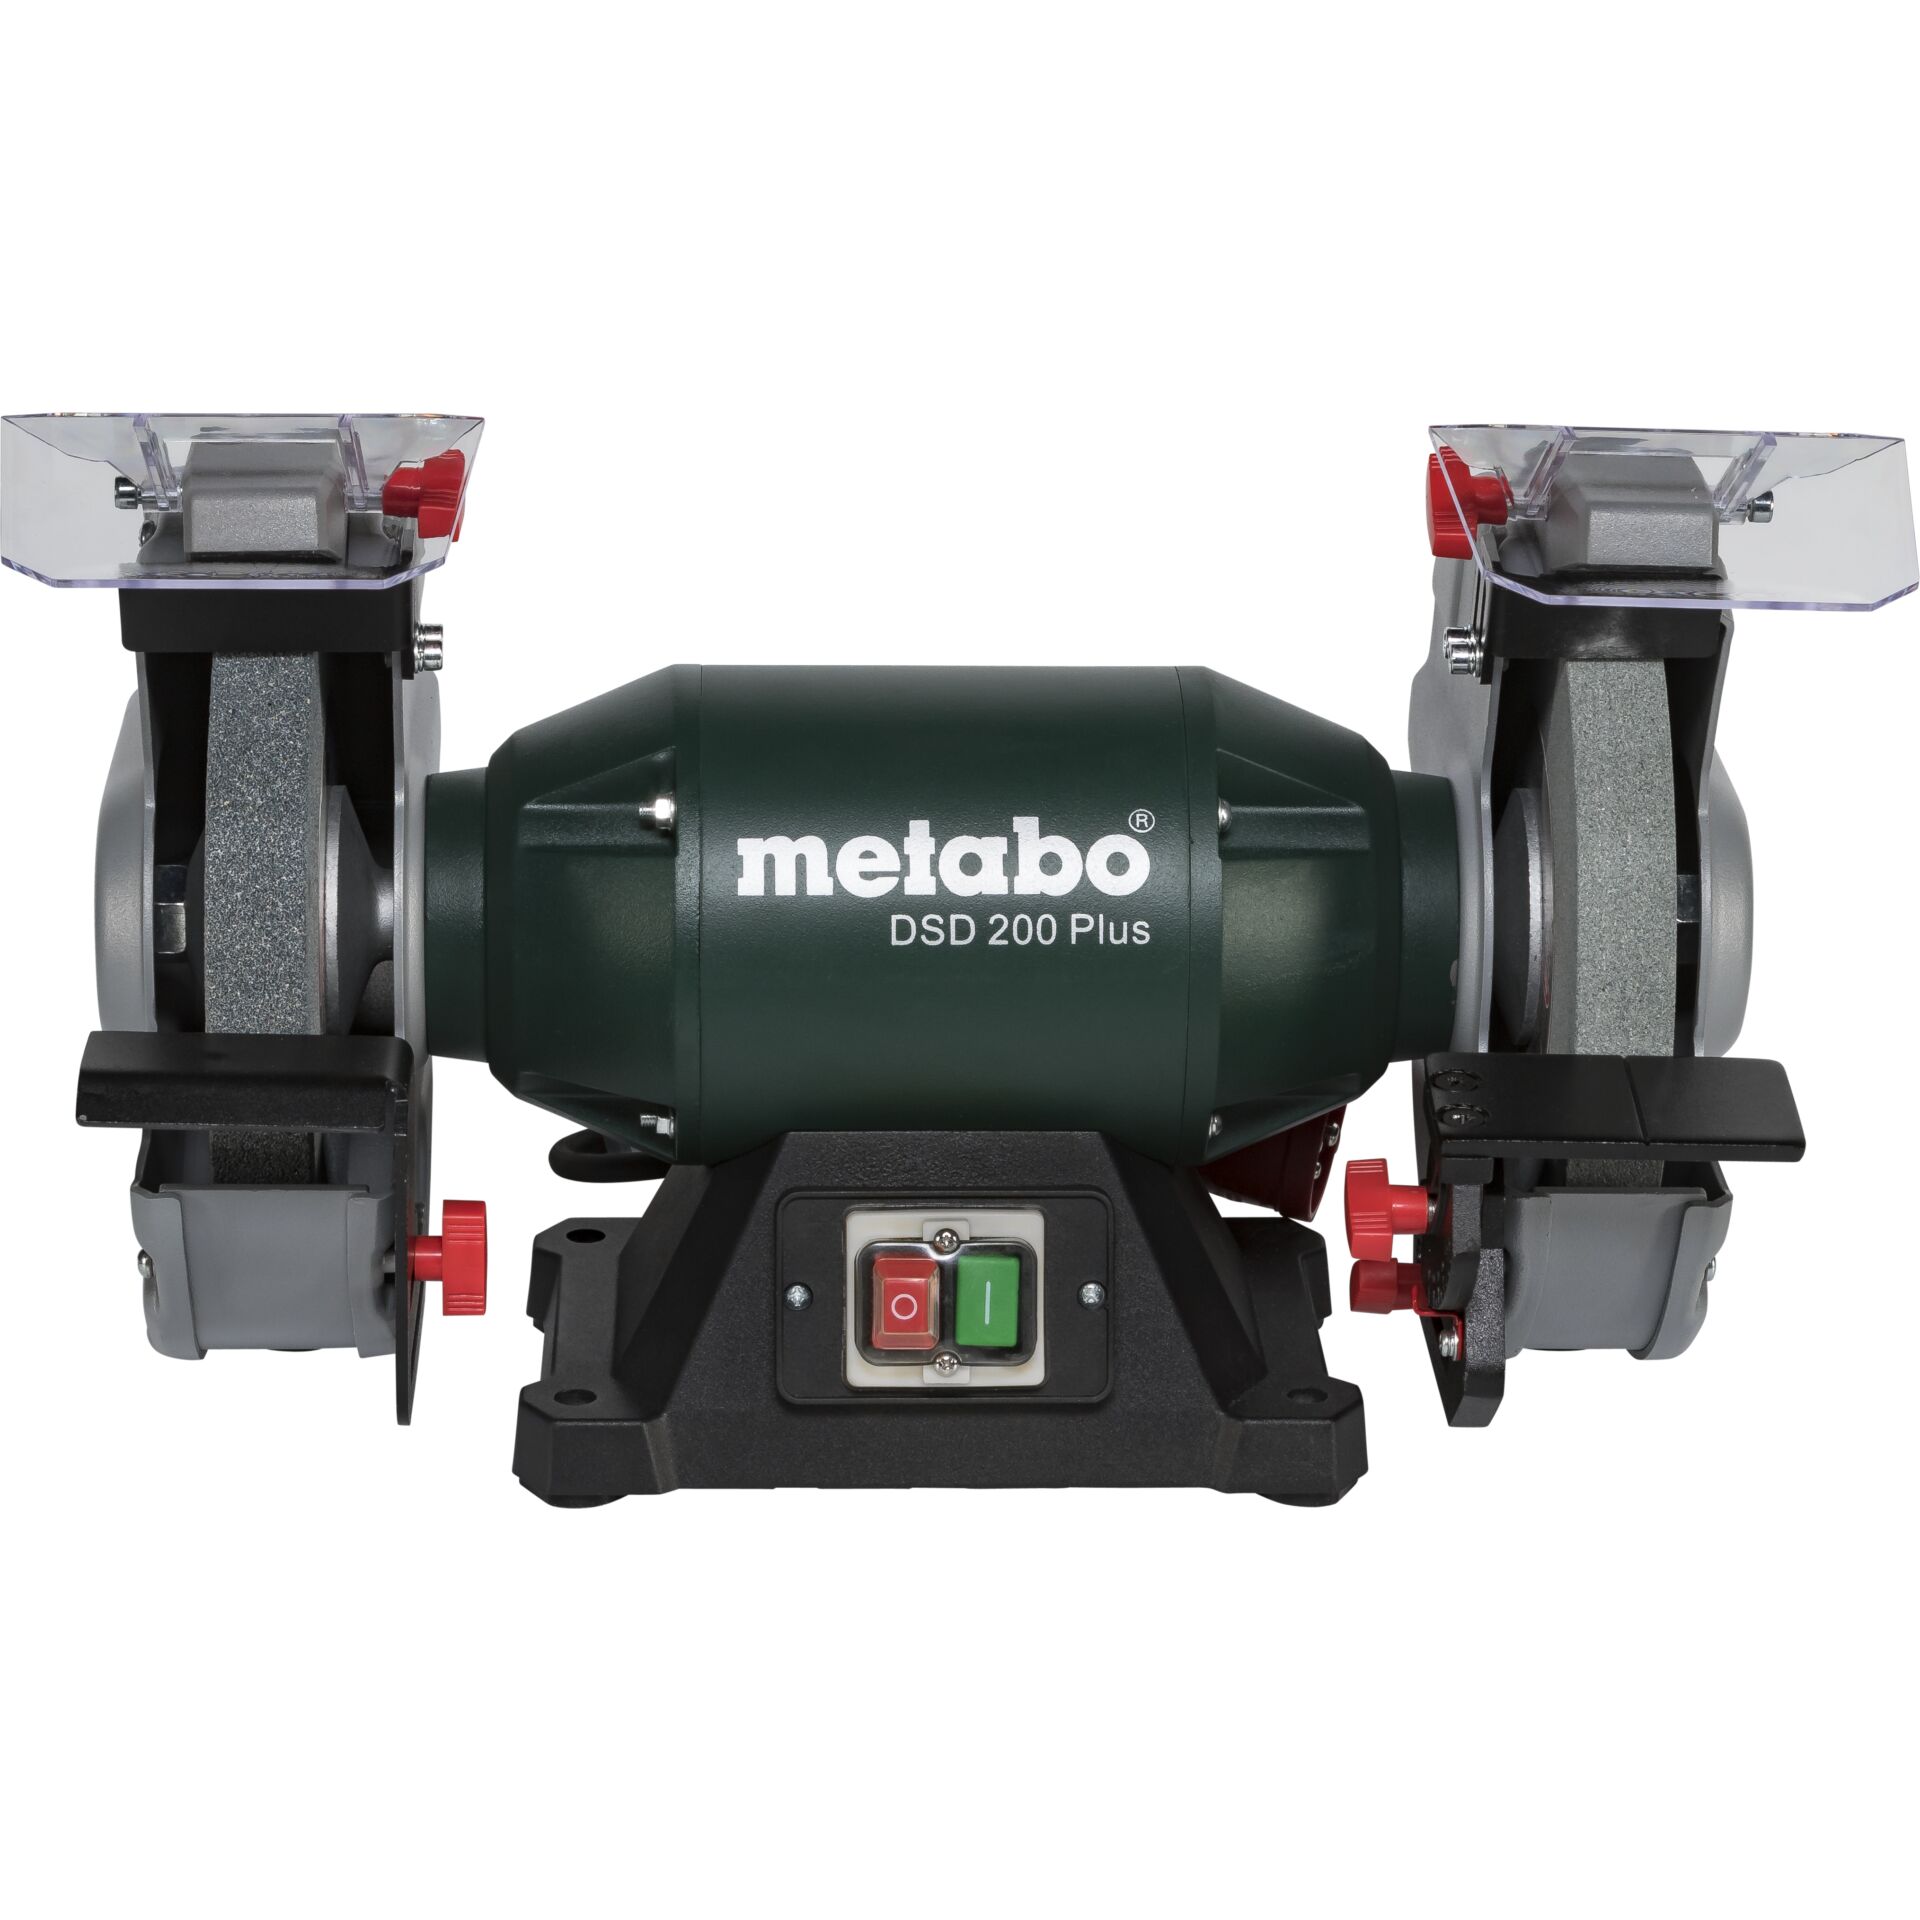 Metabo DSD 200 Plus smerigliatrice doppia